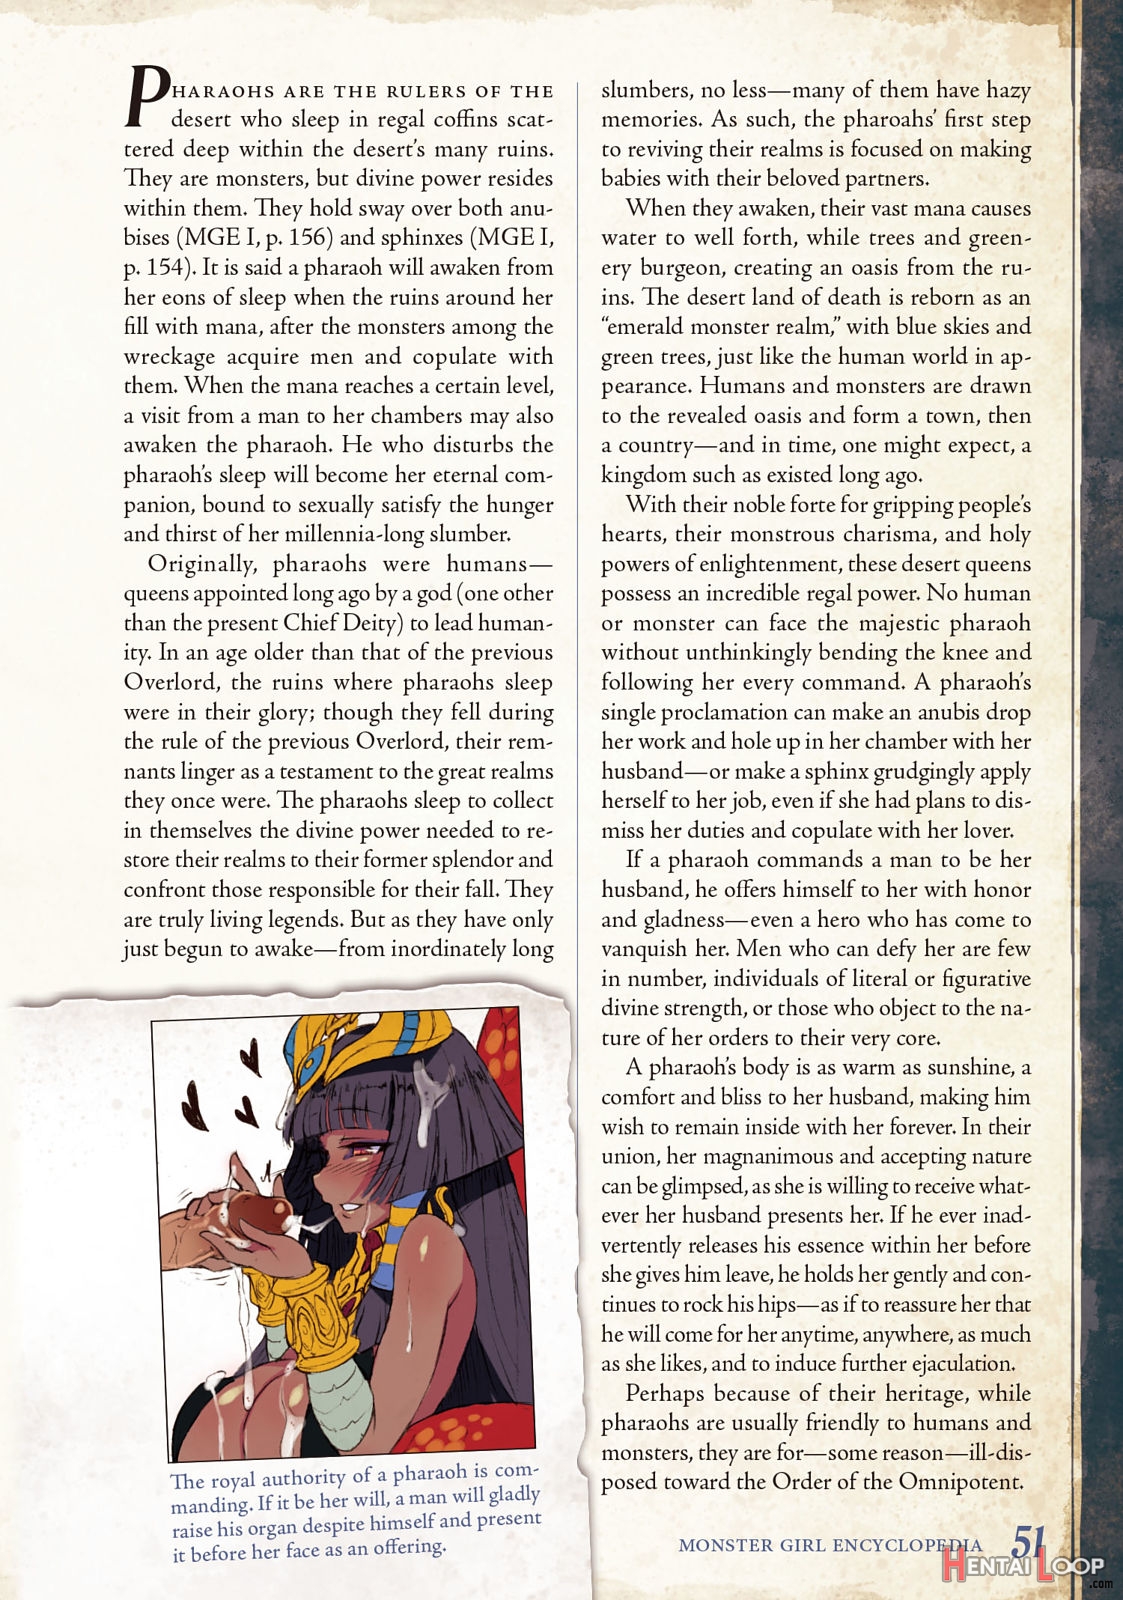 Monster Girl Encyclopedia Vol. 2 page 52